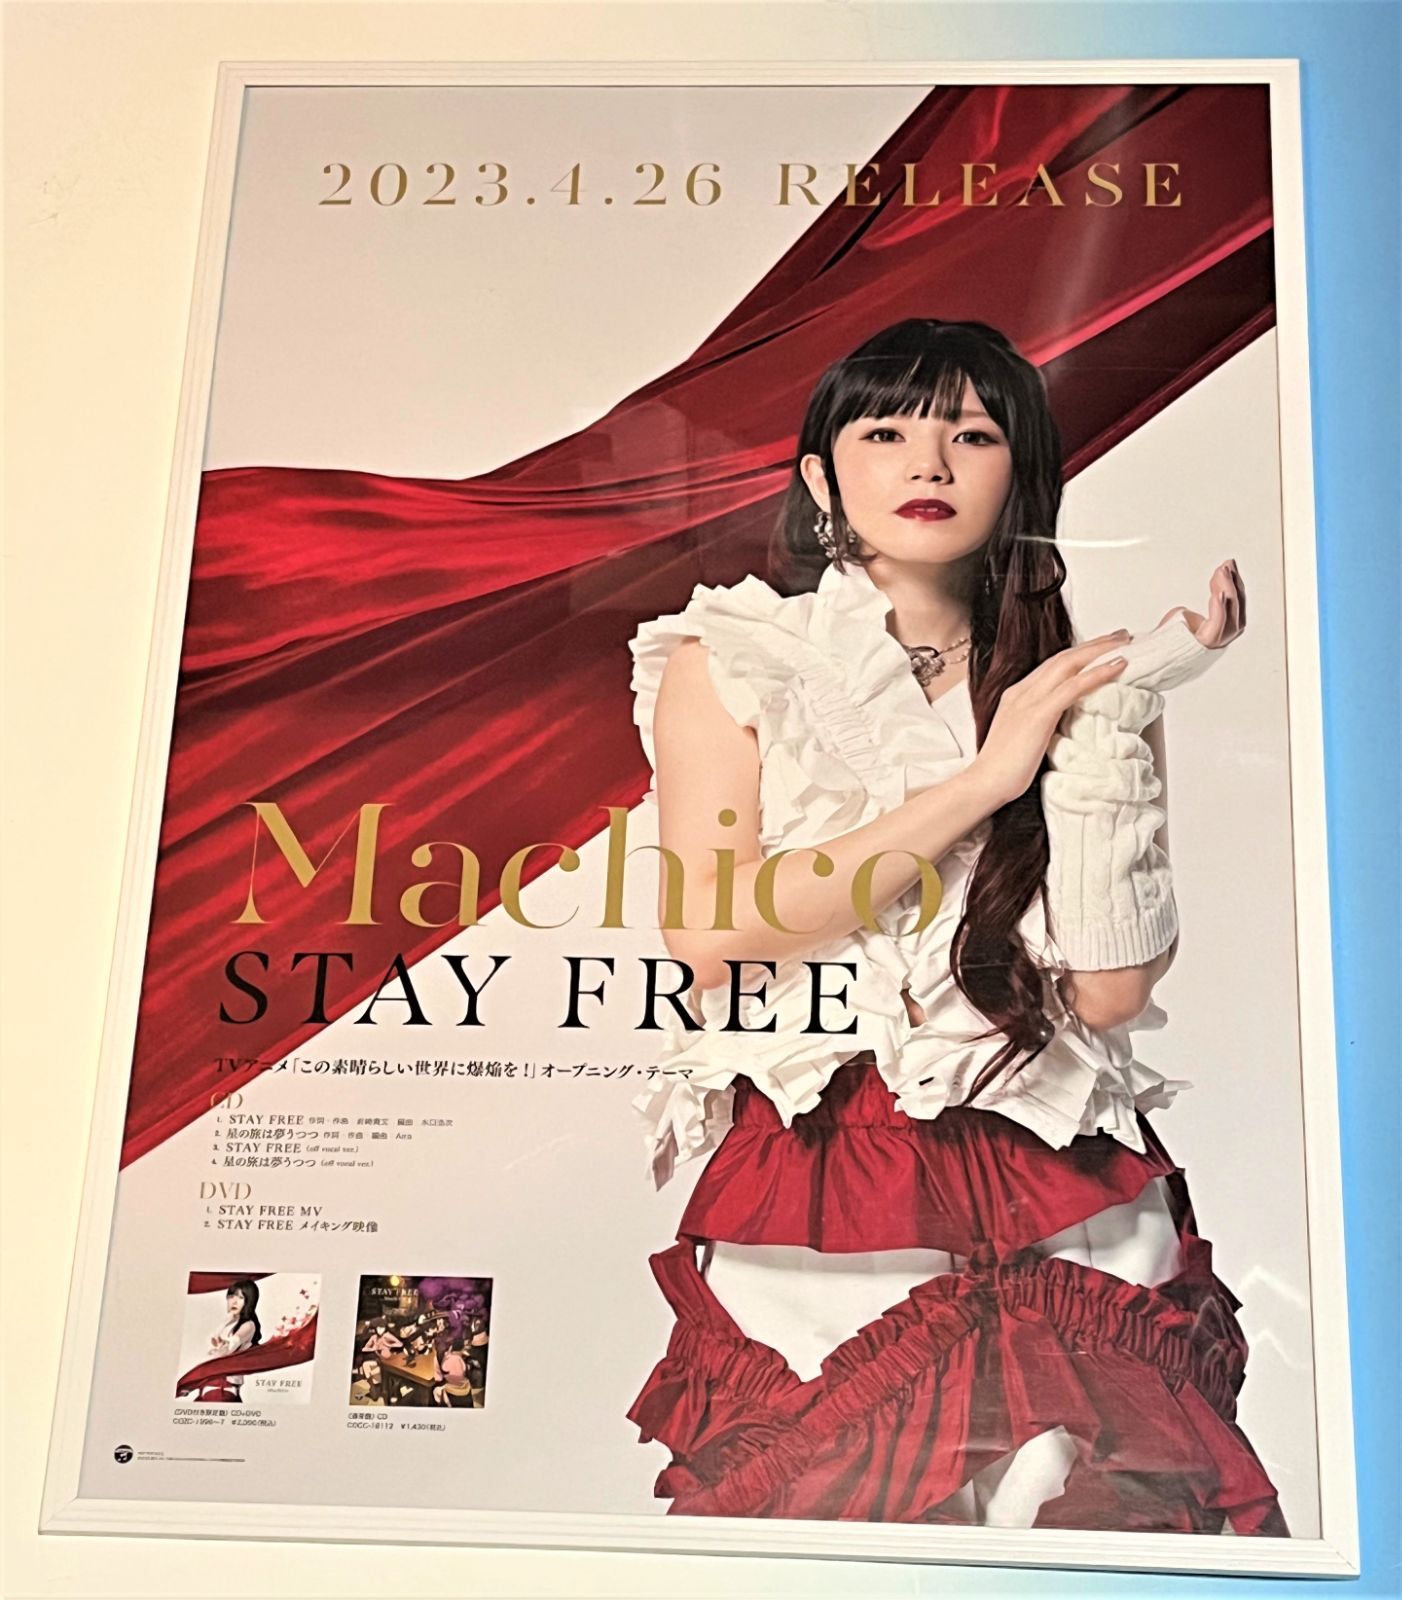 Machico STAY FREE 販売用告知B2ポスター - メルカリ